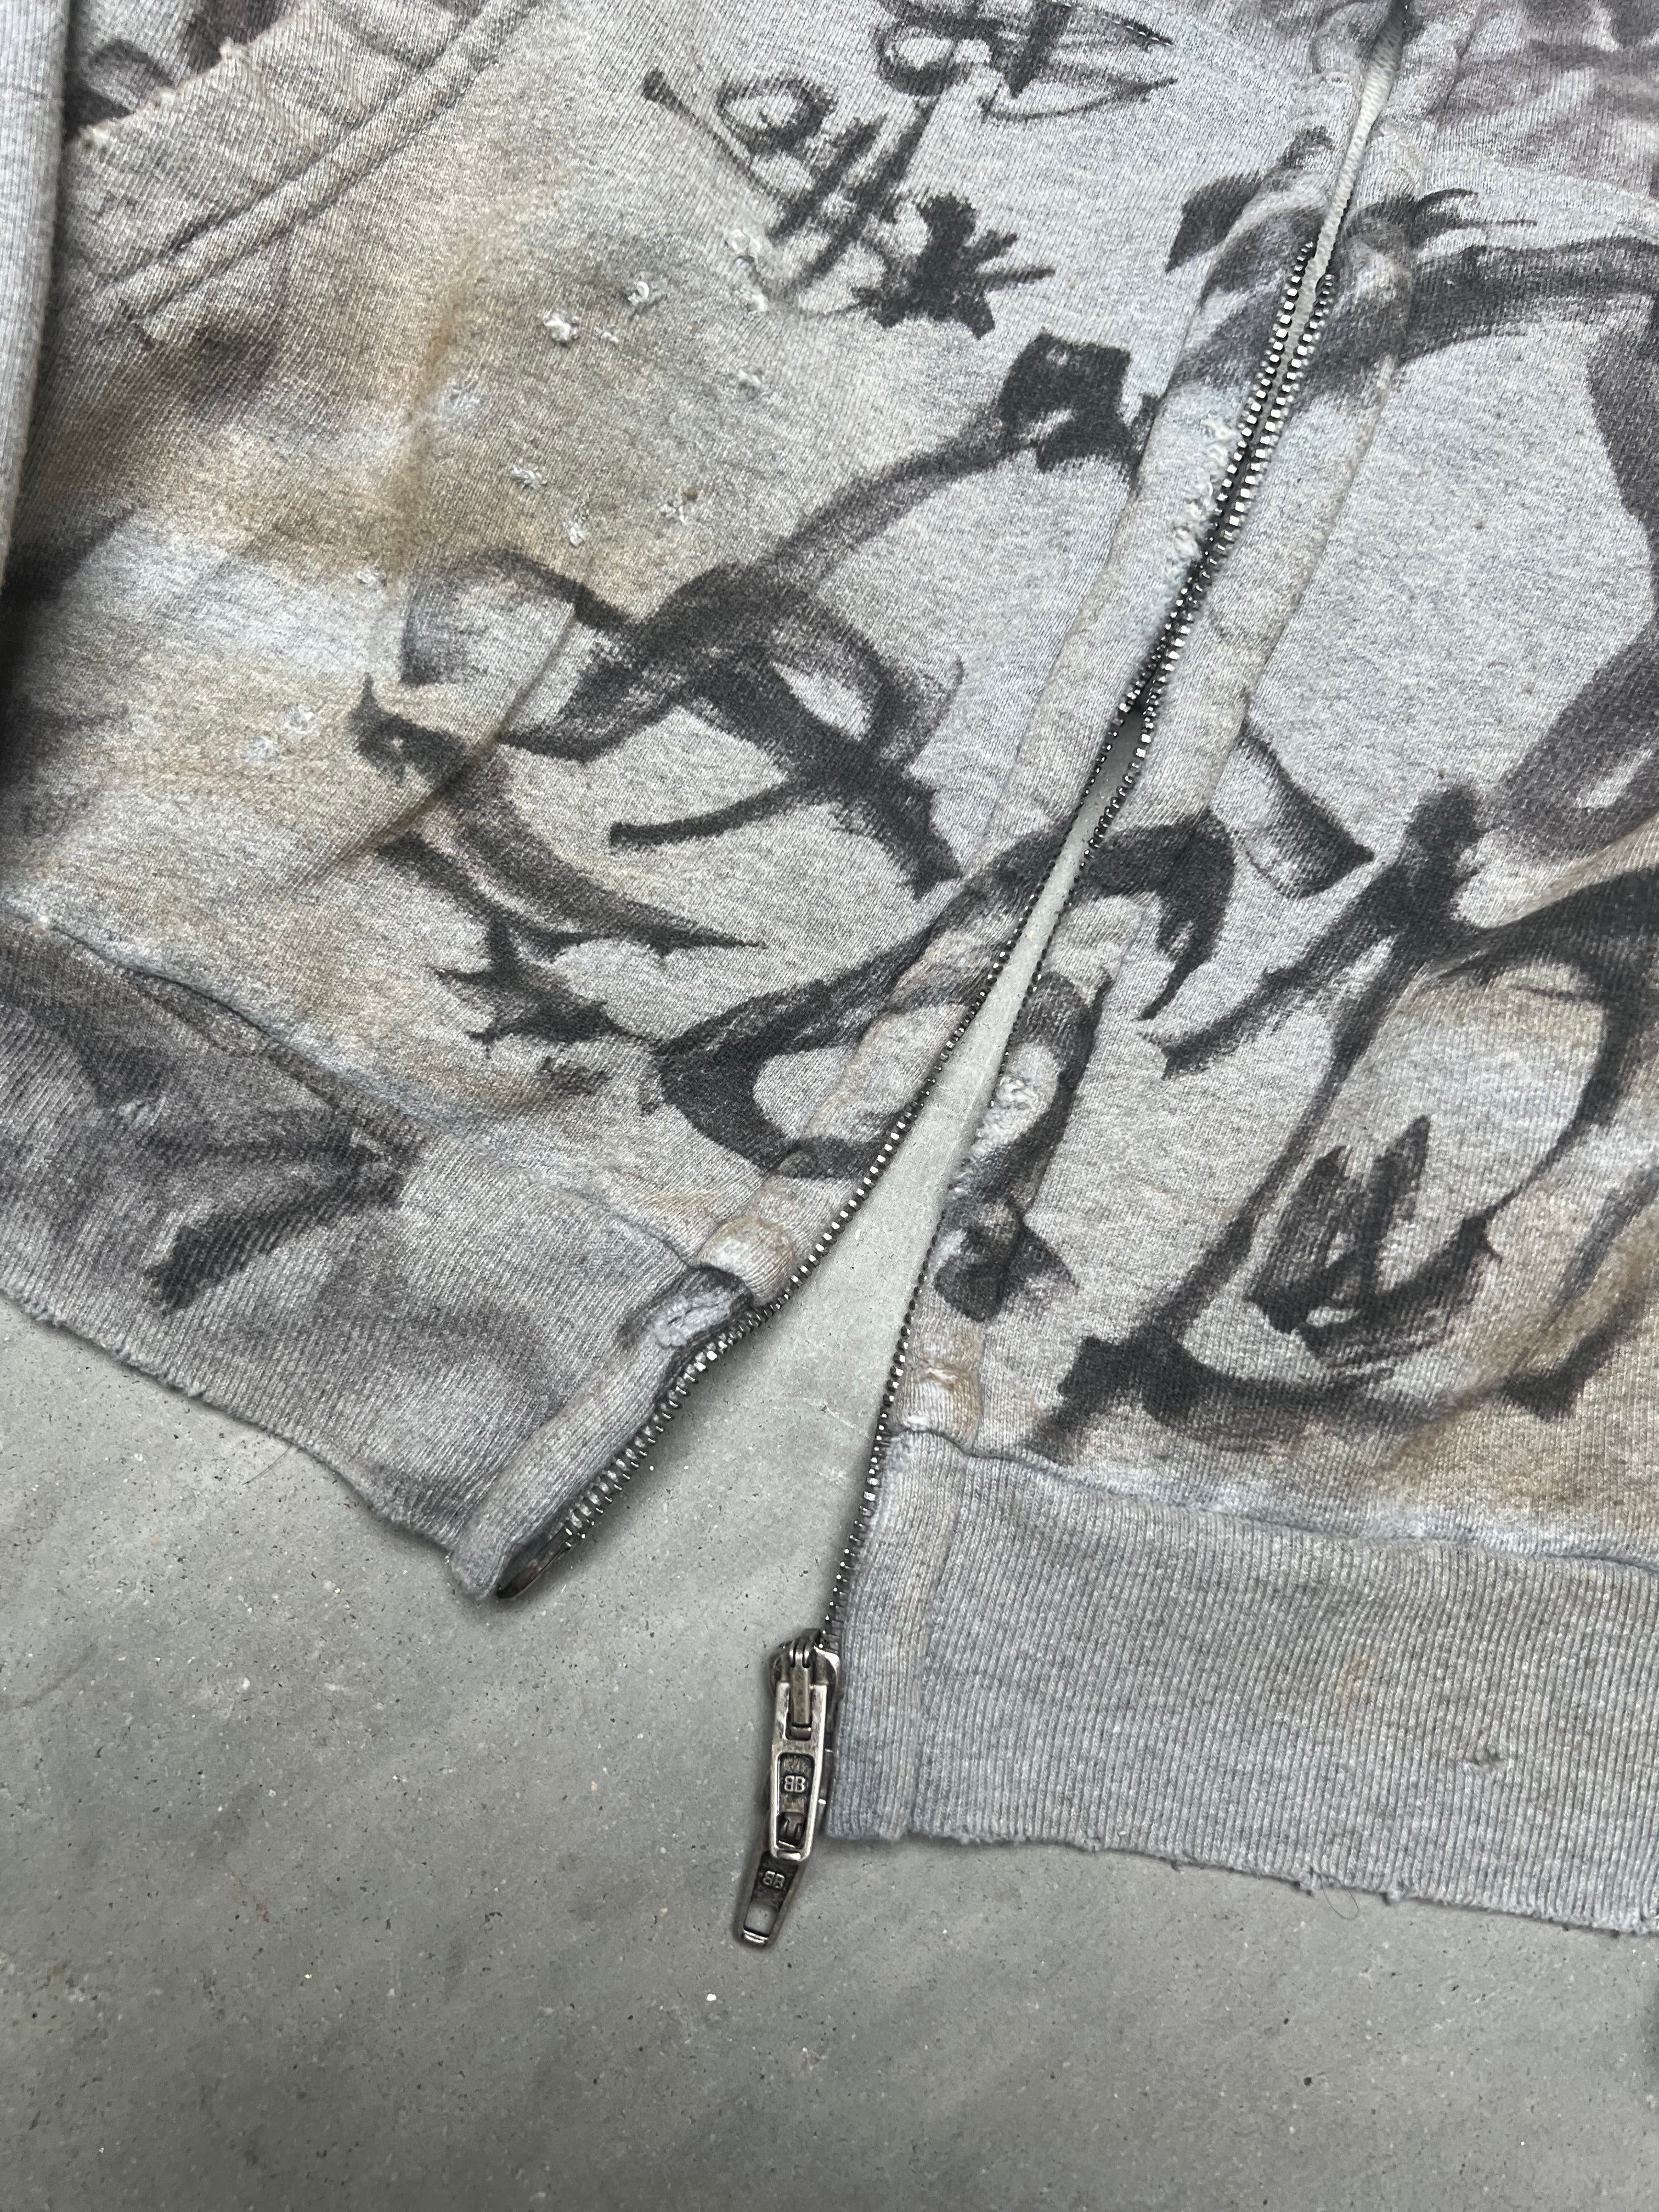 Balenciaga Graffiti Skater Crest Zip Up Hoodie Grey – ARCHIVE A